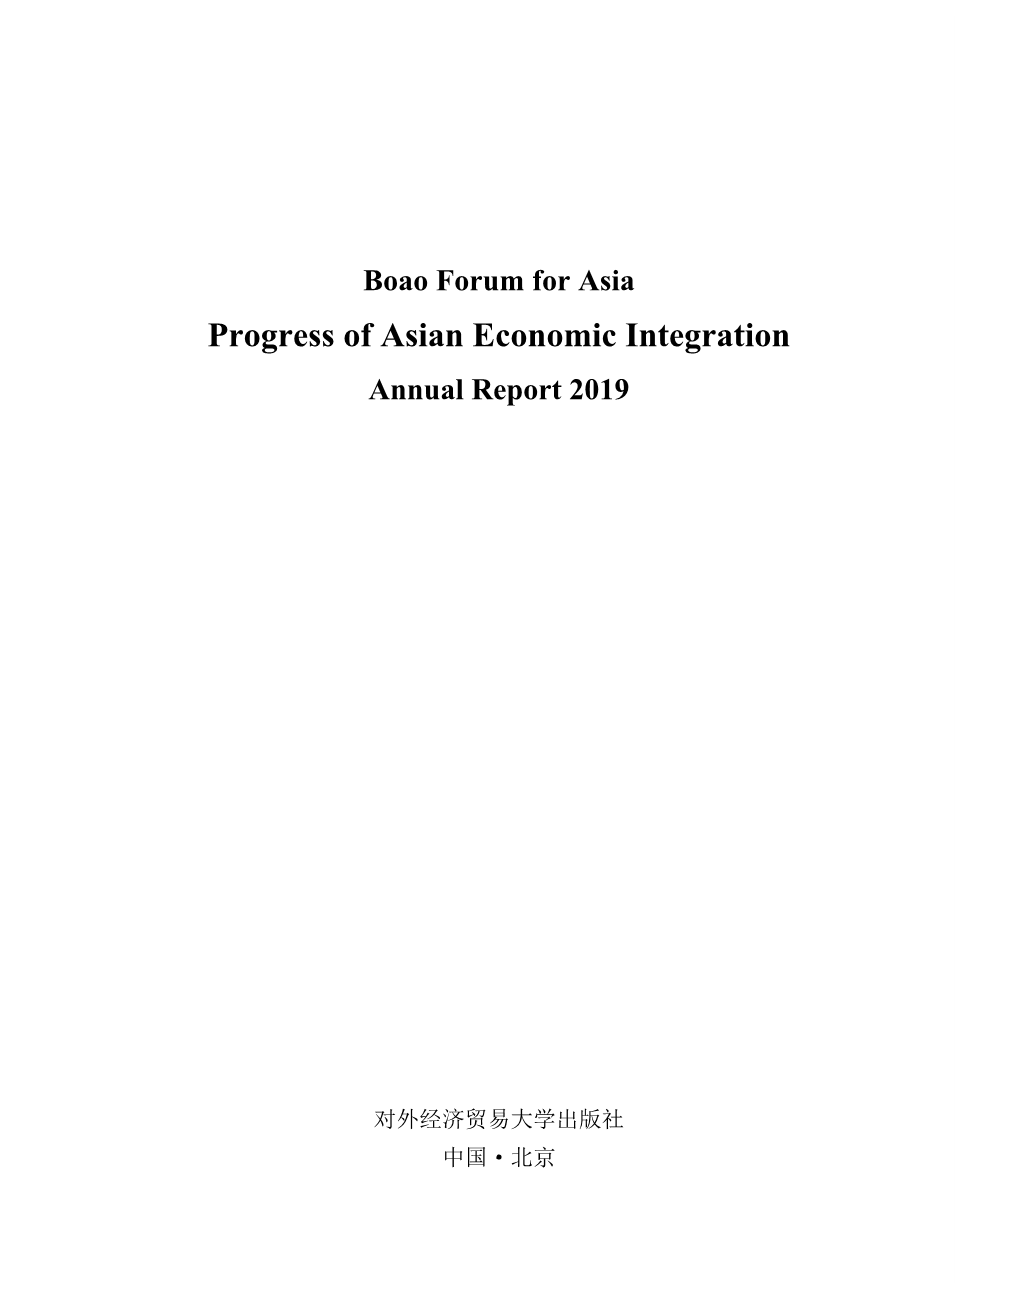 Progress of Asian Economic Integration Annual Report 2019